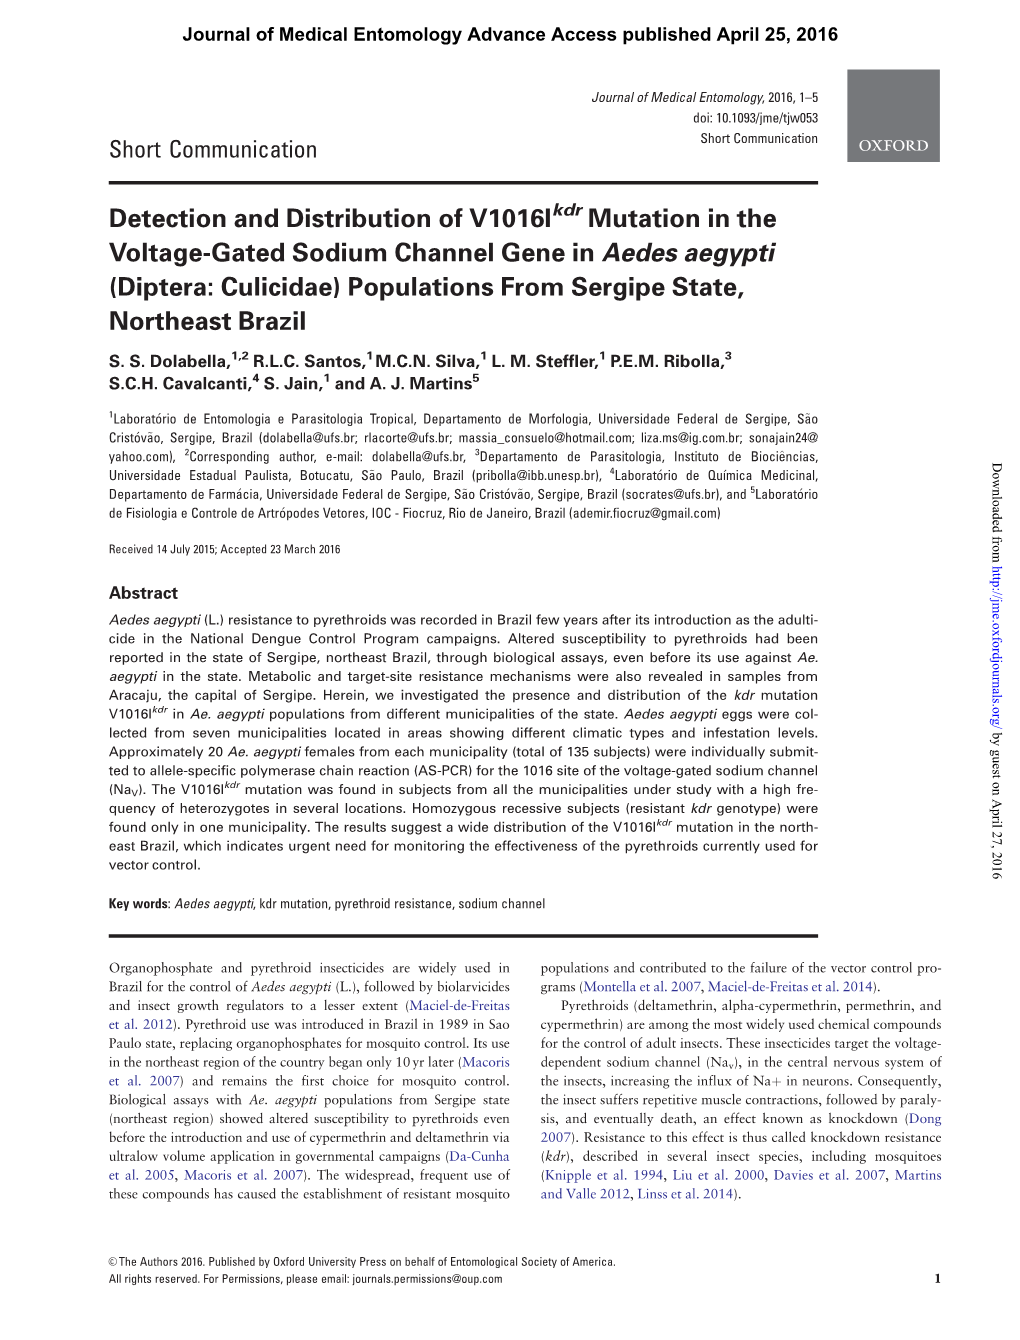 Detection and Distribution of V1016ikdr Mutation in the Voltage